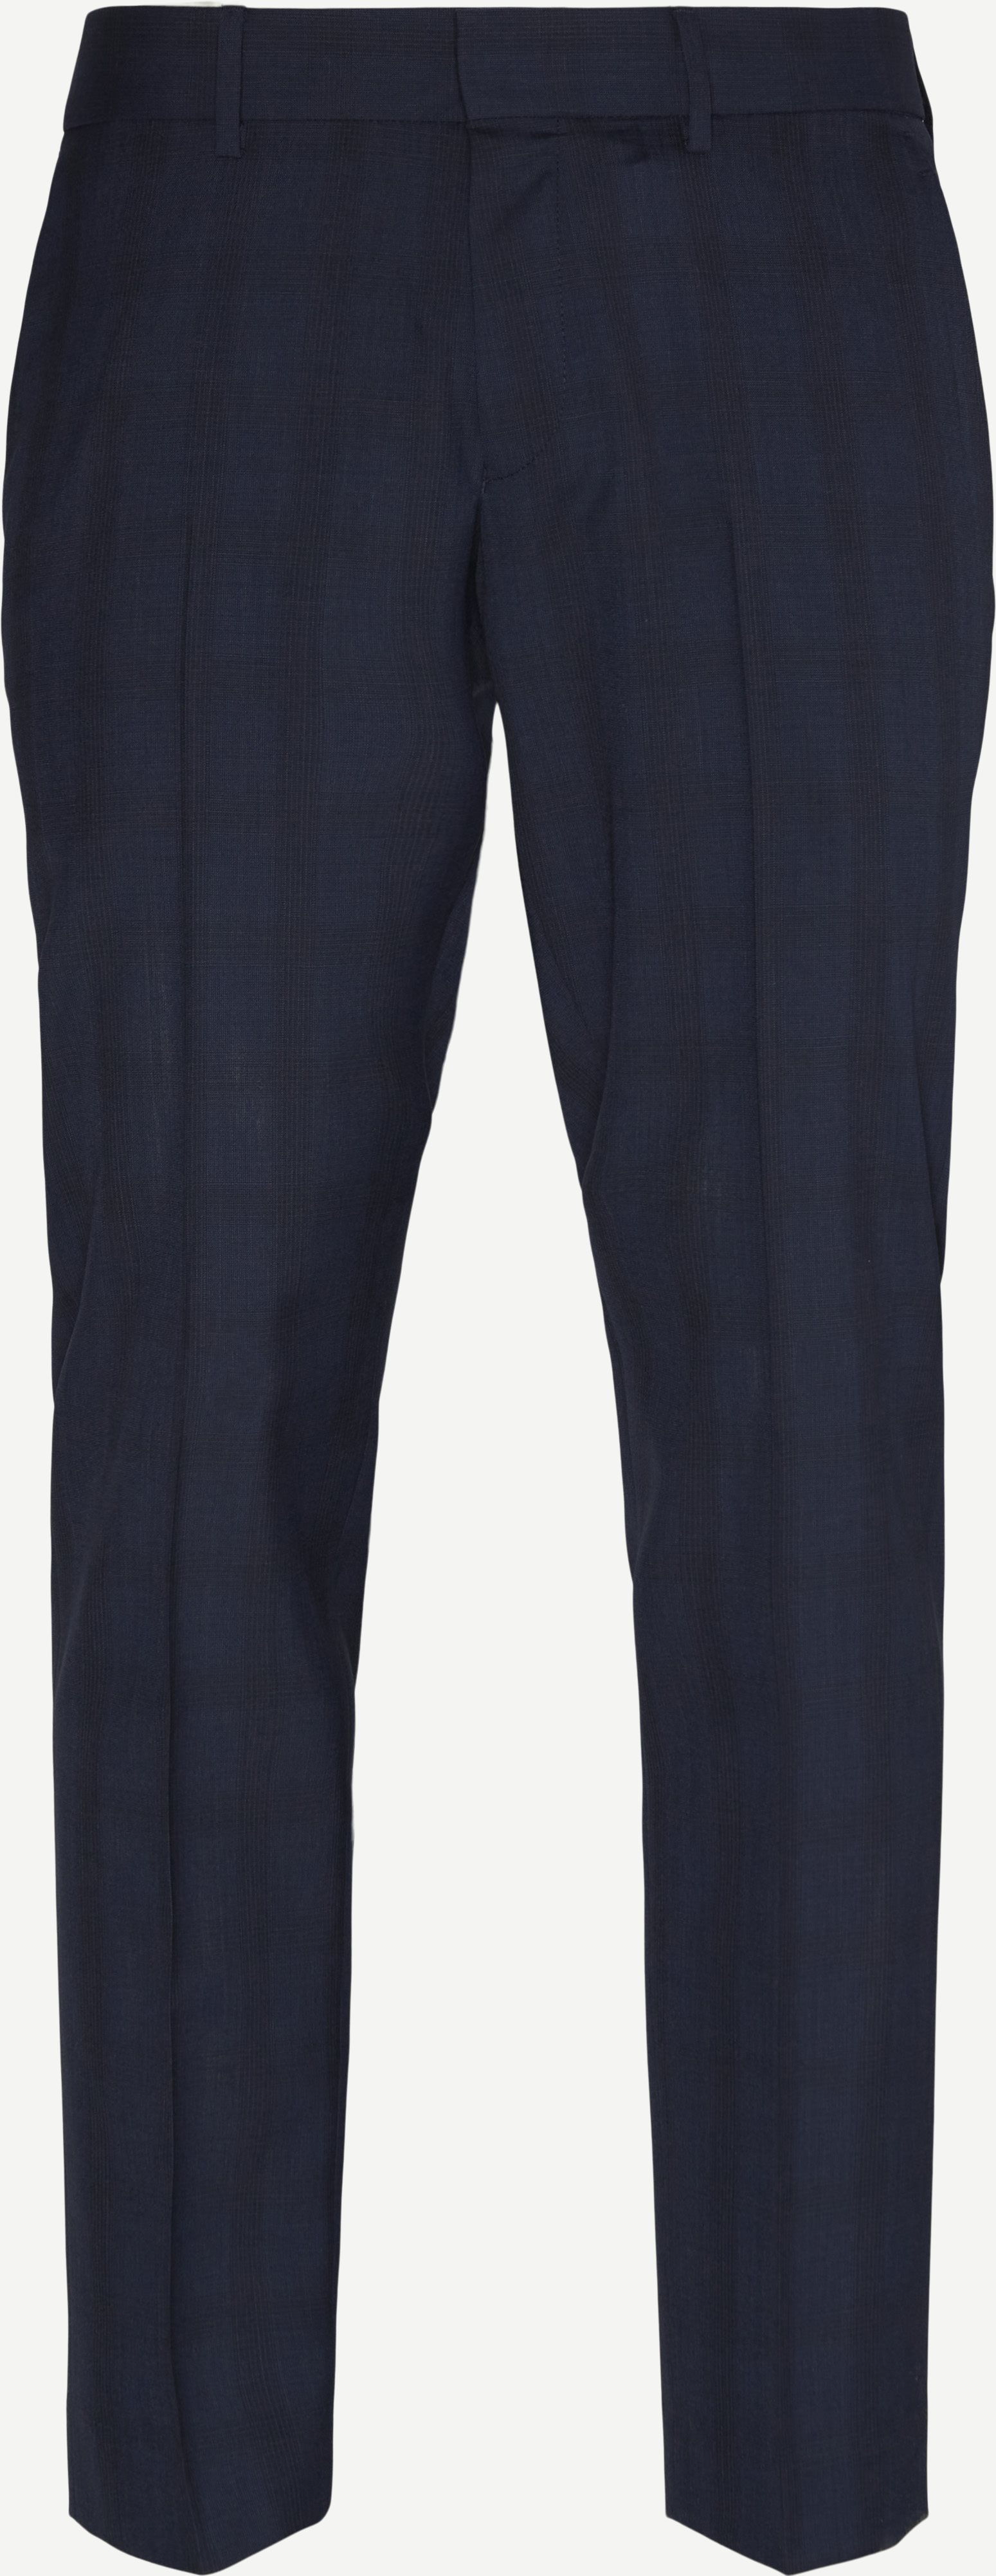 Tord Pants - Bukser - Regular fit - Blå